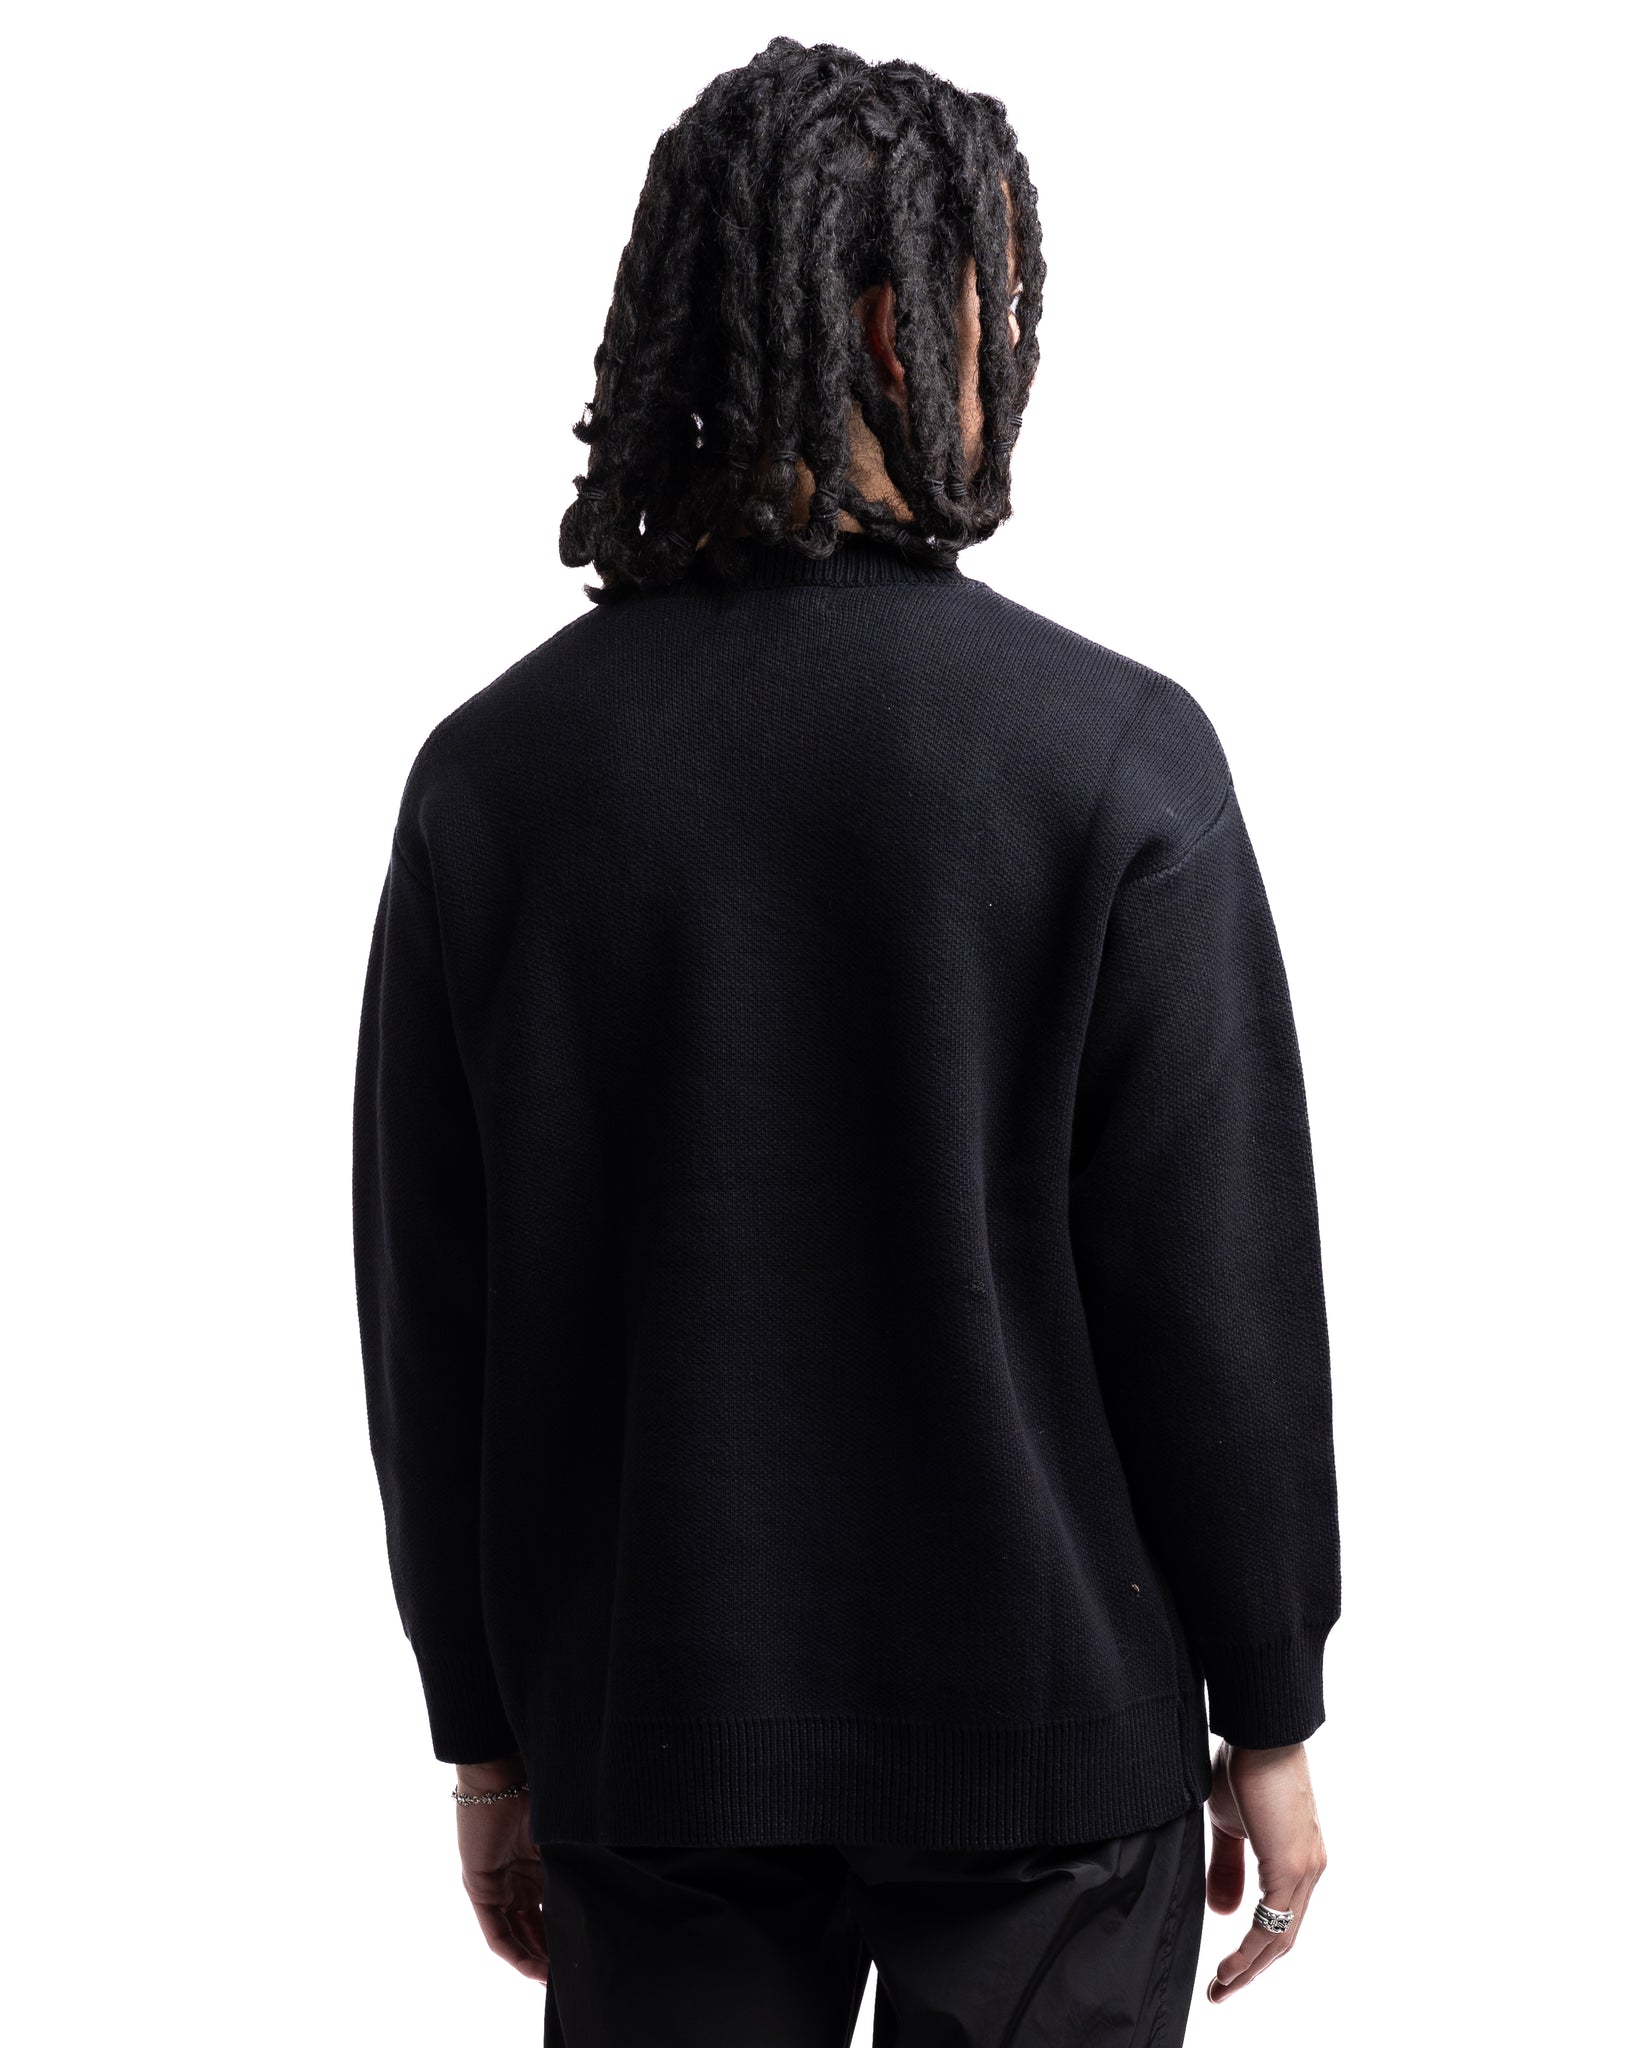 Keiser Clark Longhorn Sweater Black